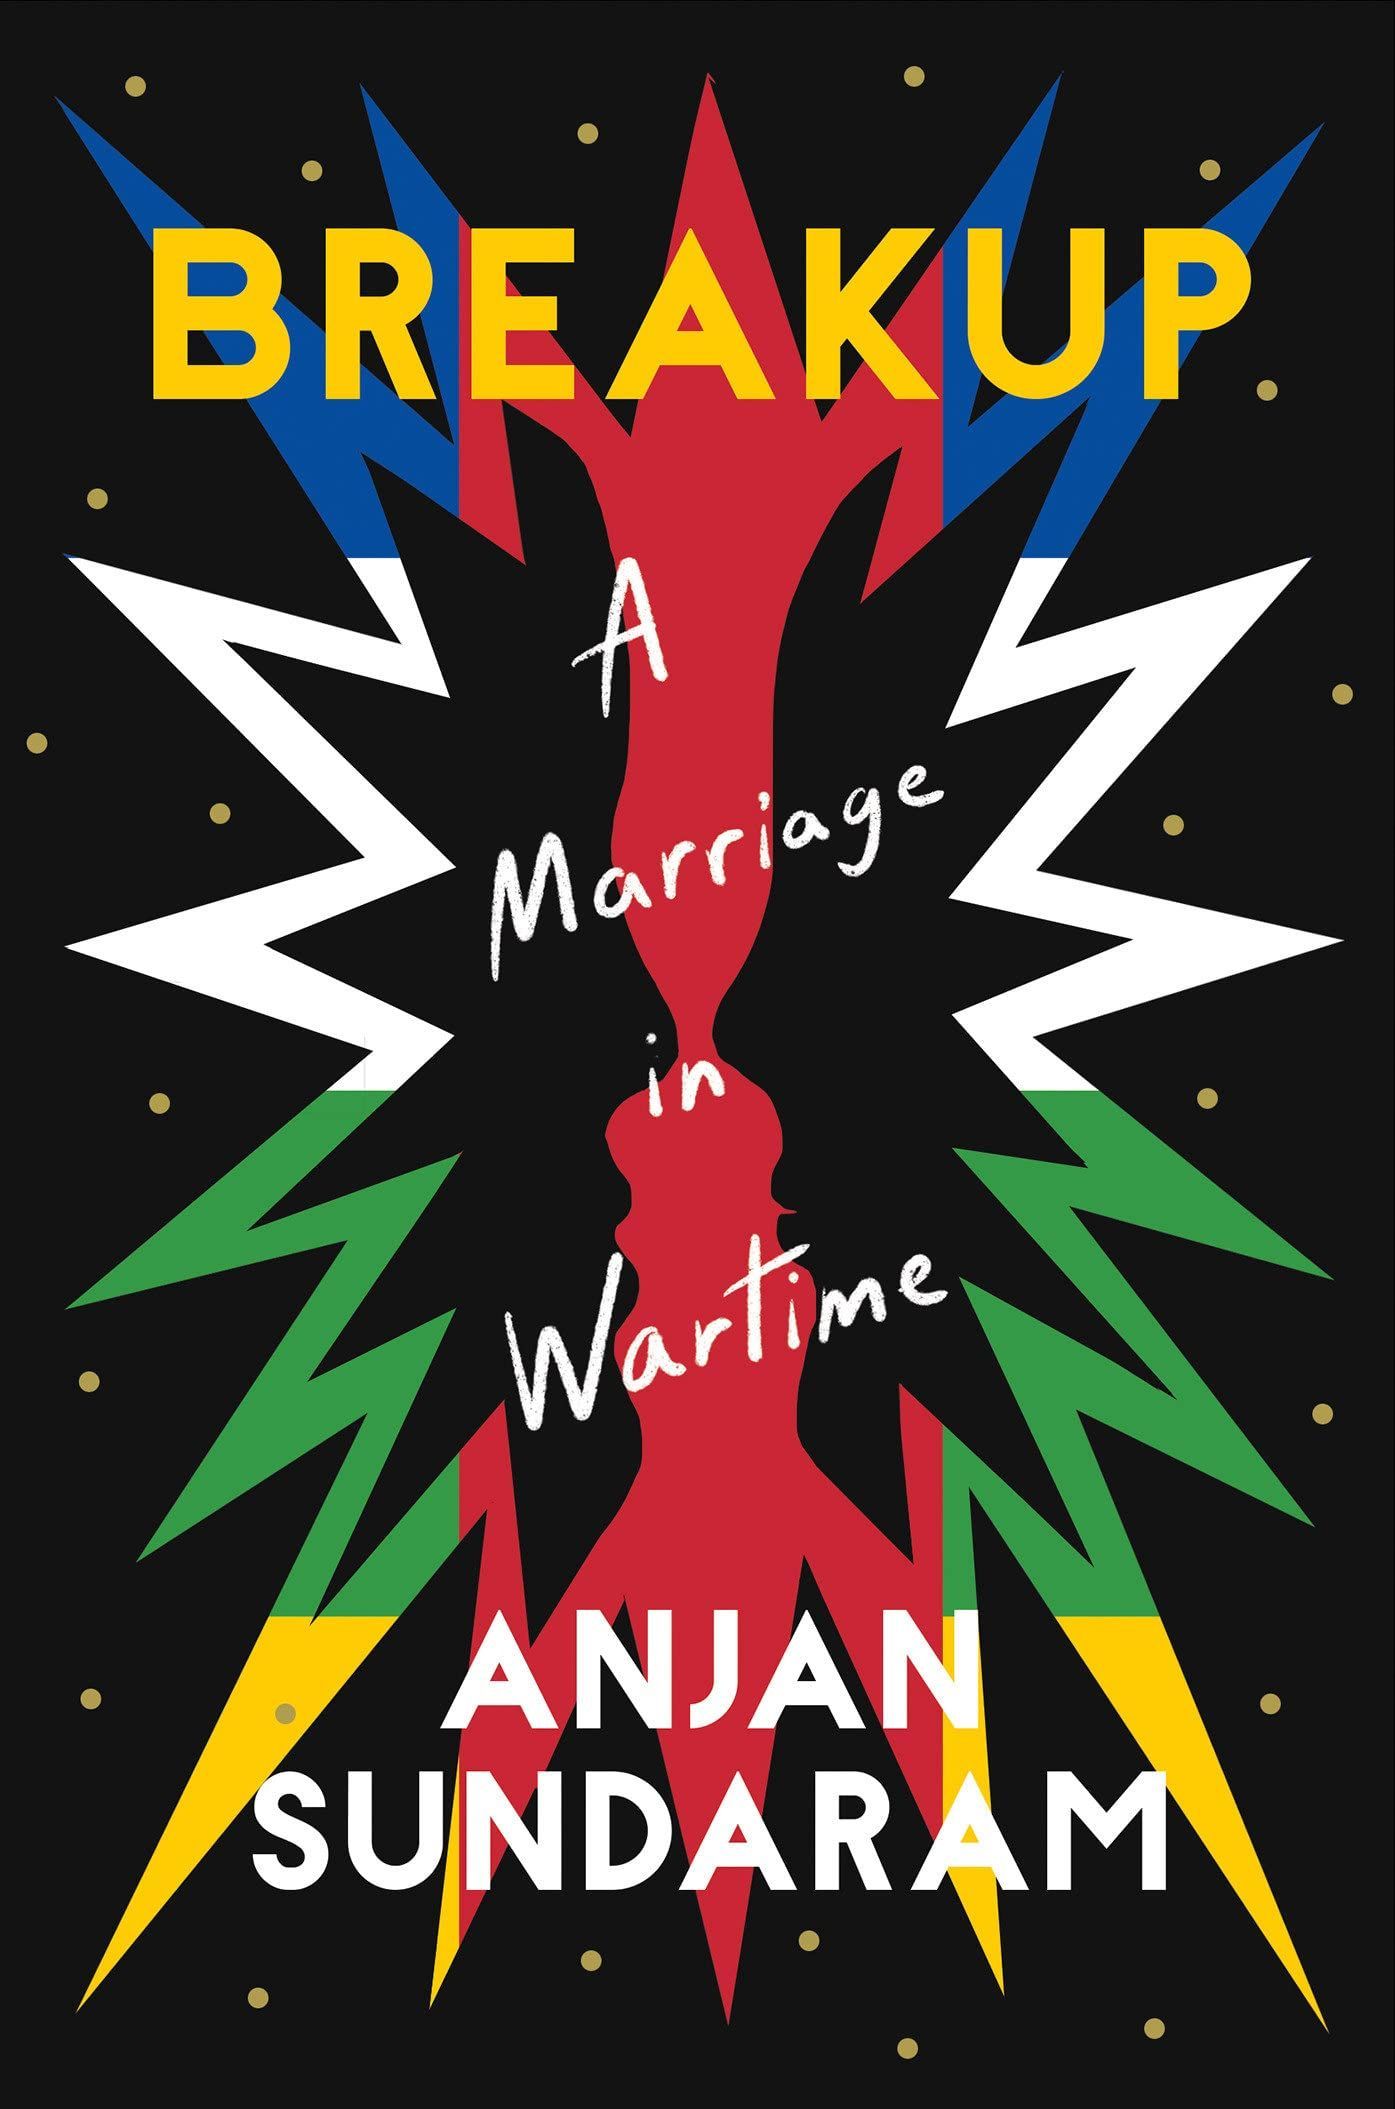 Darkness of Hearts: On Anjan Sundaram’s “Breakup”